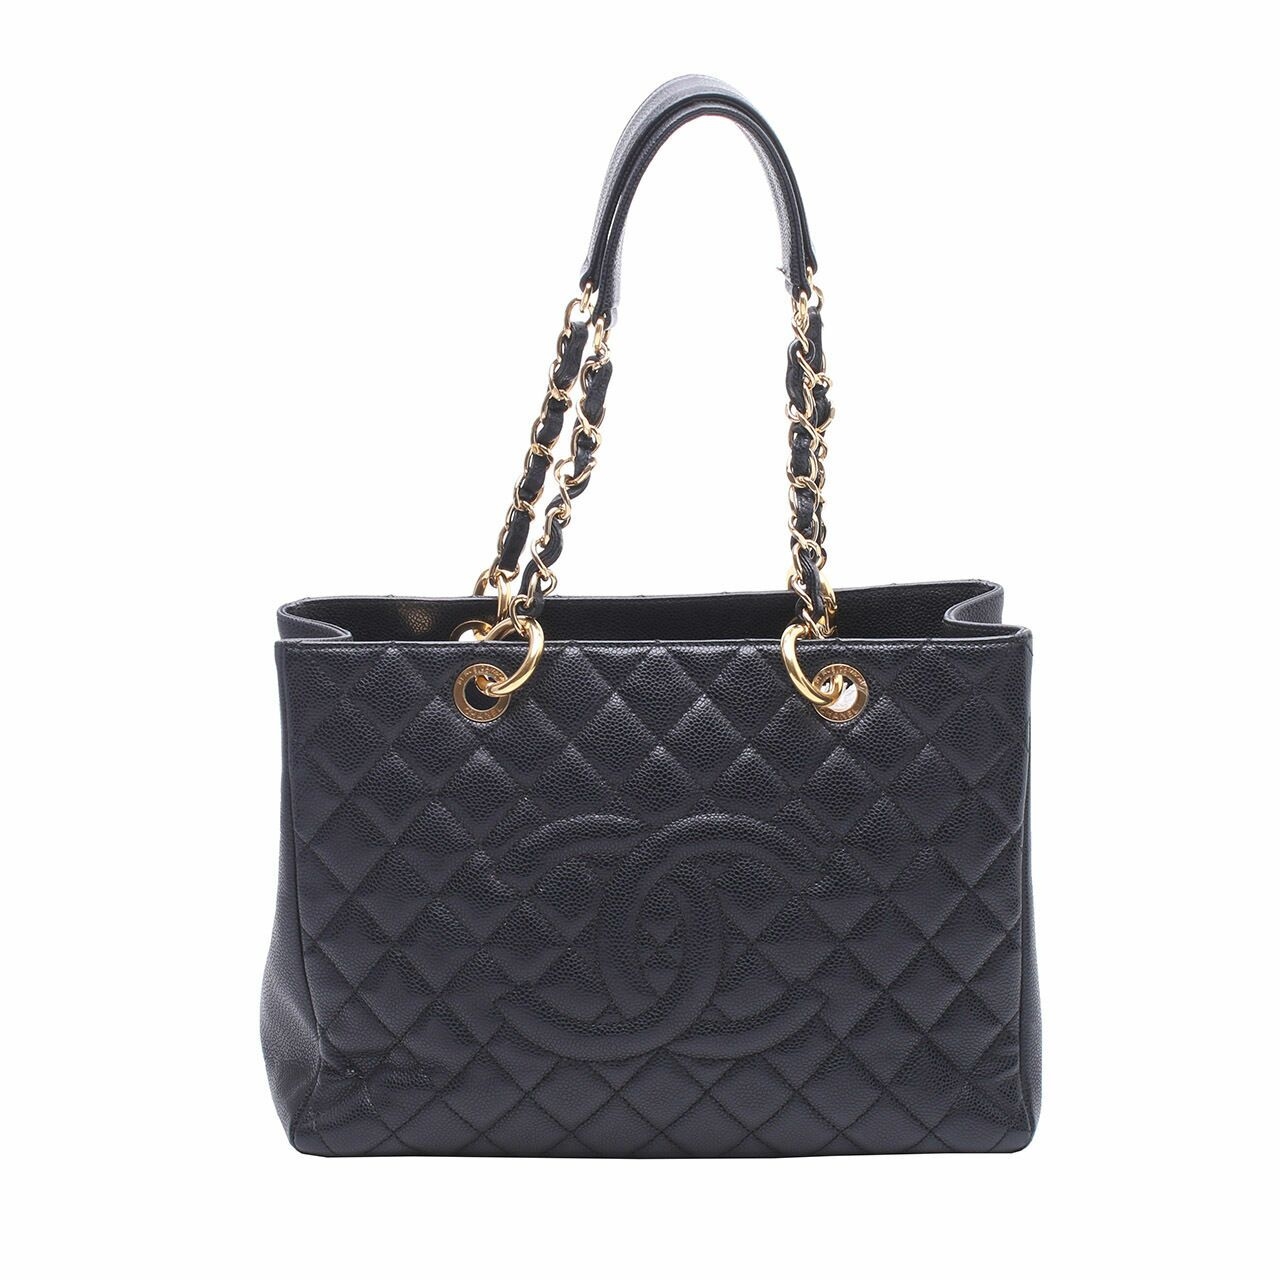 Chanel Caviar Black Shoulder Bag